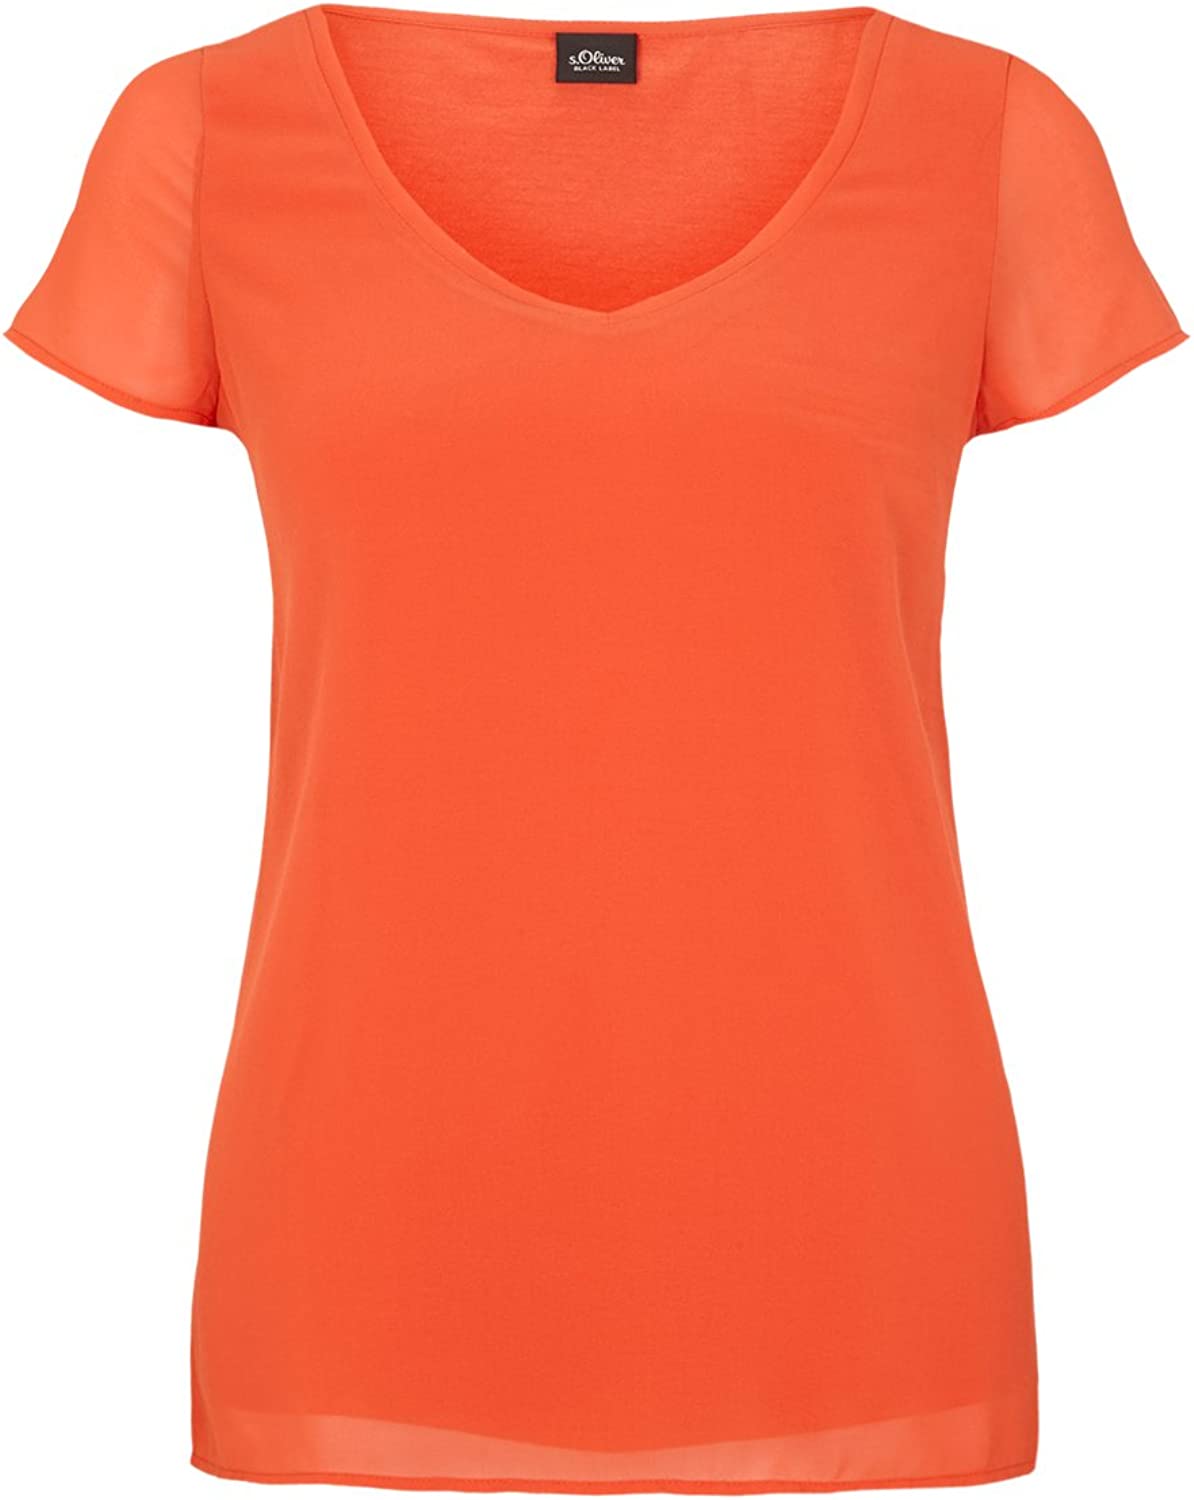 Ženska bluza s.Oliver Black Label, narandžasta